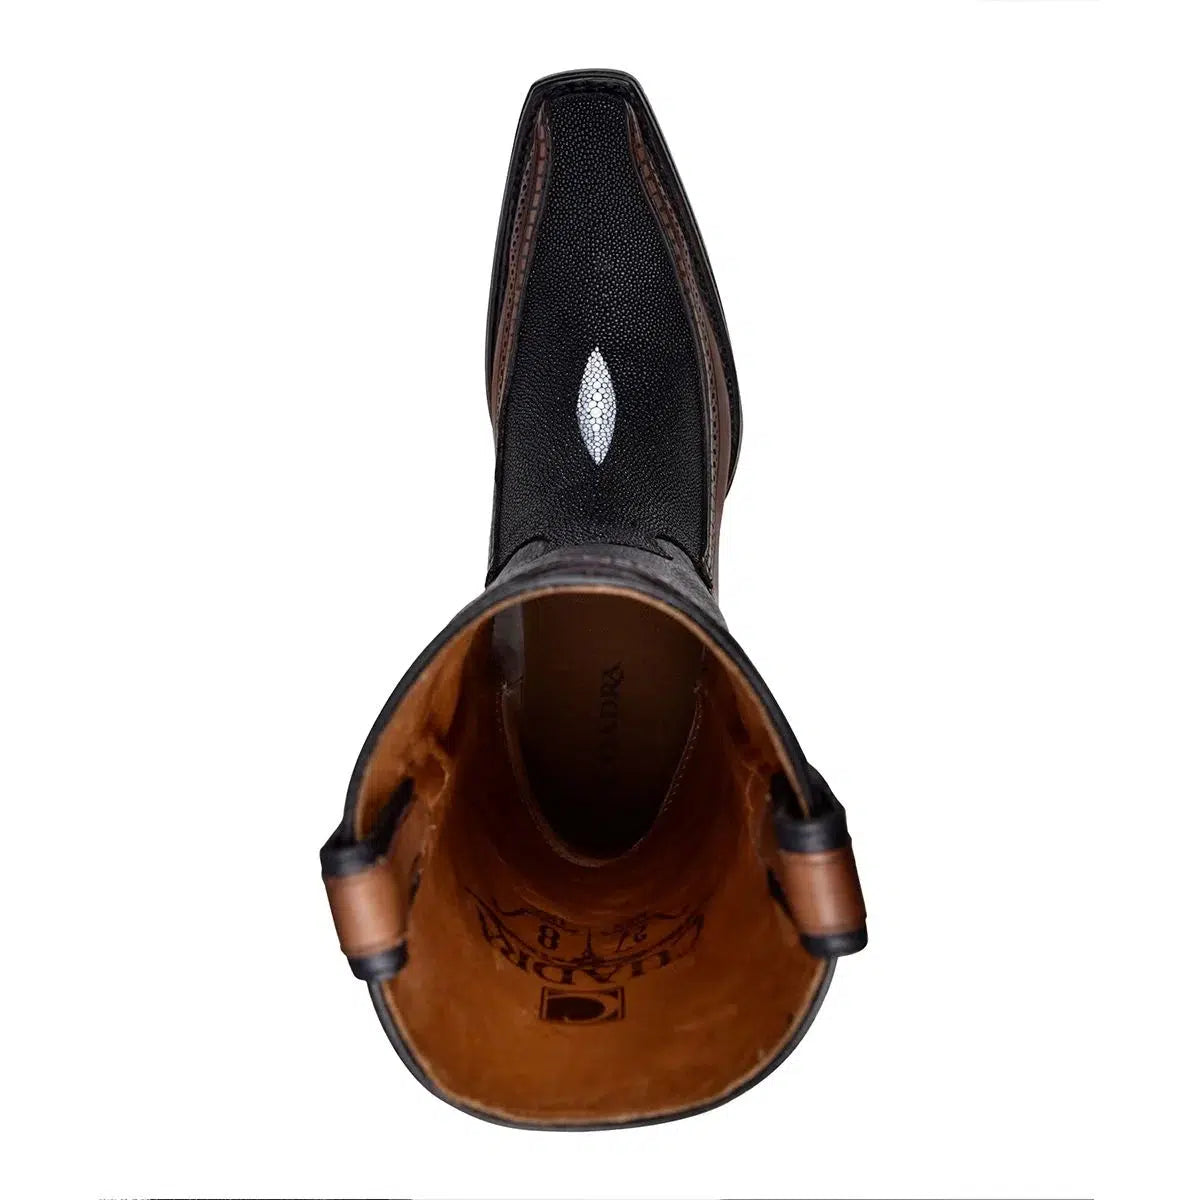 1B1DMA - Cuadra black and brown casual cowboy stingray boots for men-CUADRA-Kuet-Cuadra-Boots